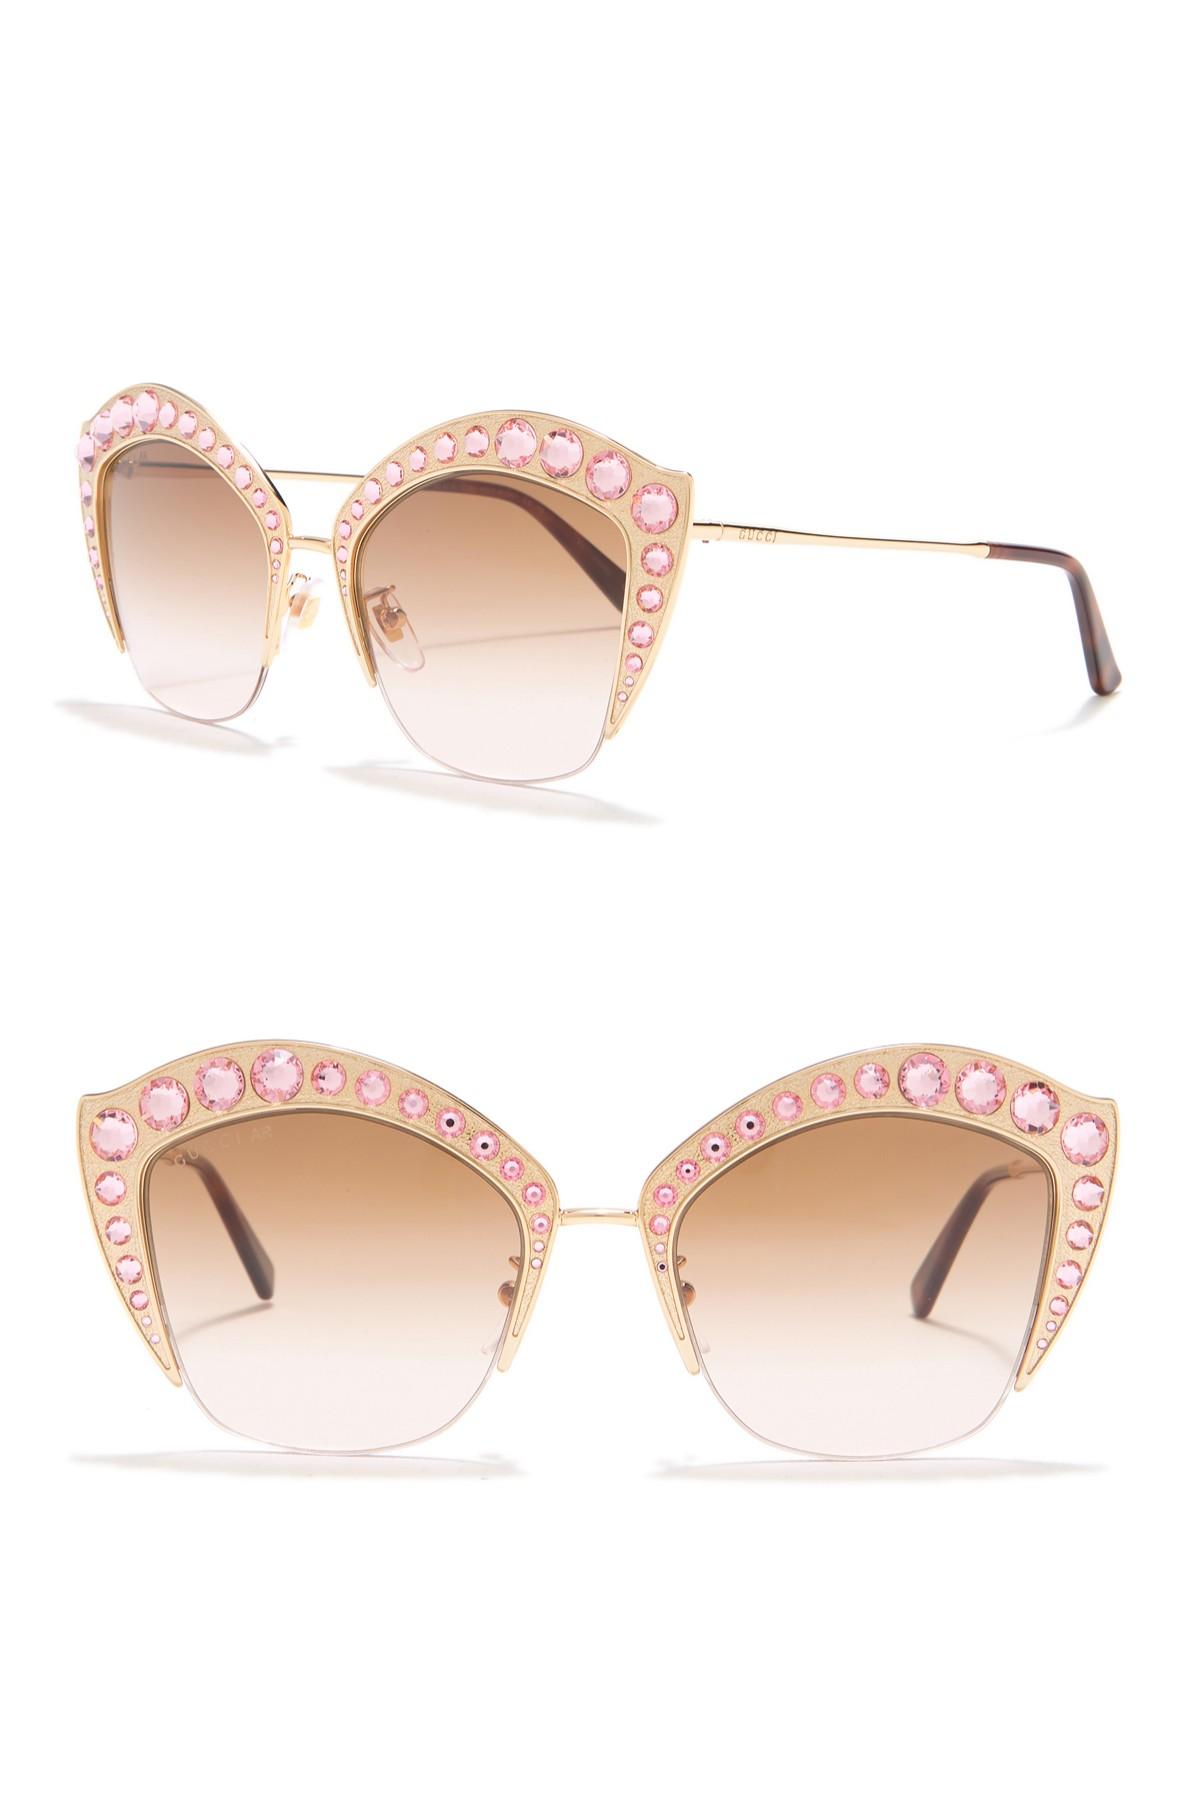 Gucci 53mm Irregular Cat Eye Crystal Embellished Sunglasses - Lyst